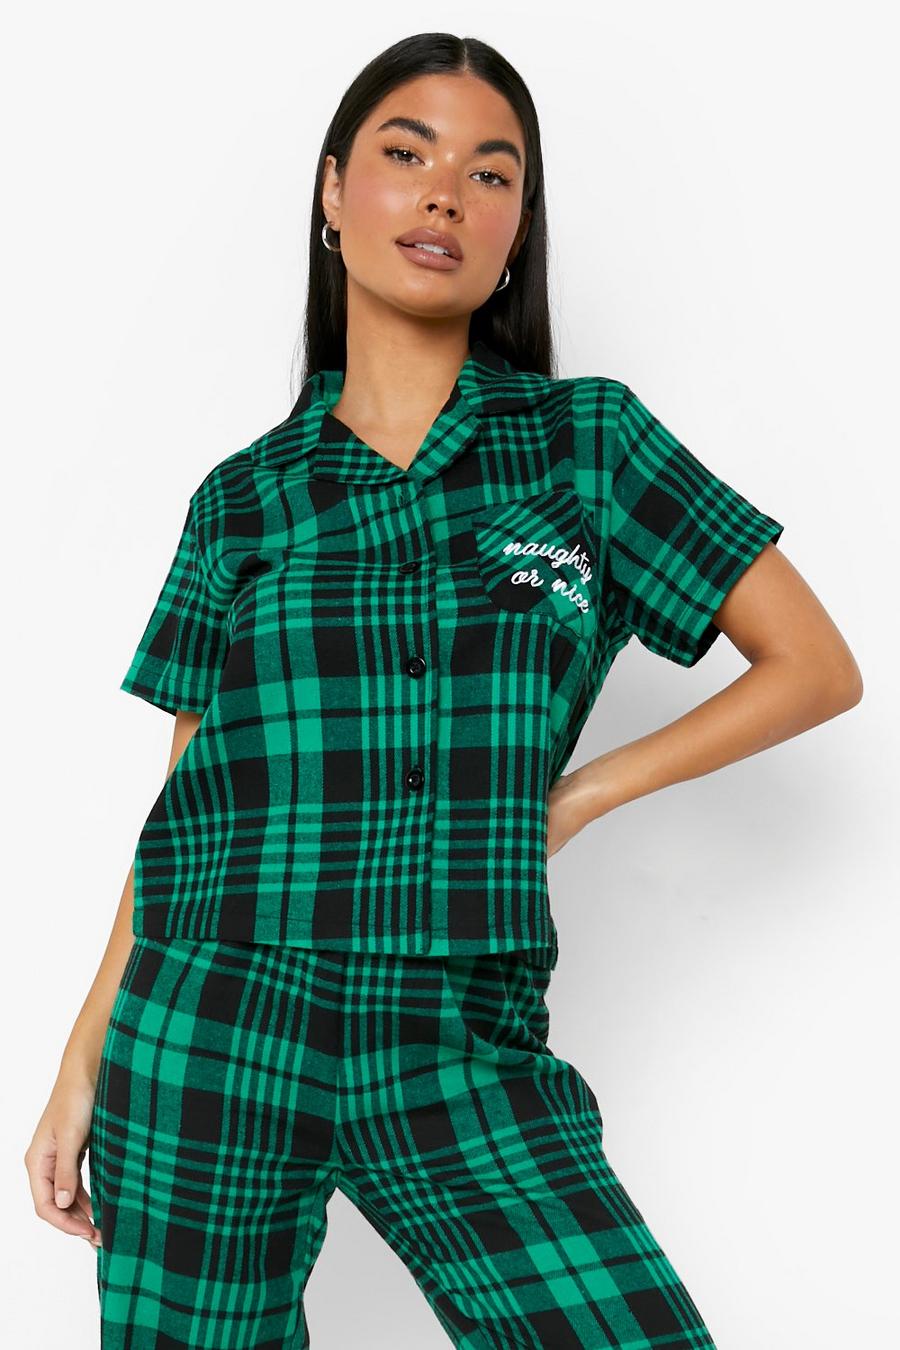 Camicia Petite con slogan natalizio Naughty Or Nice, Green gerde